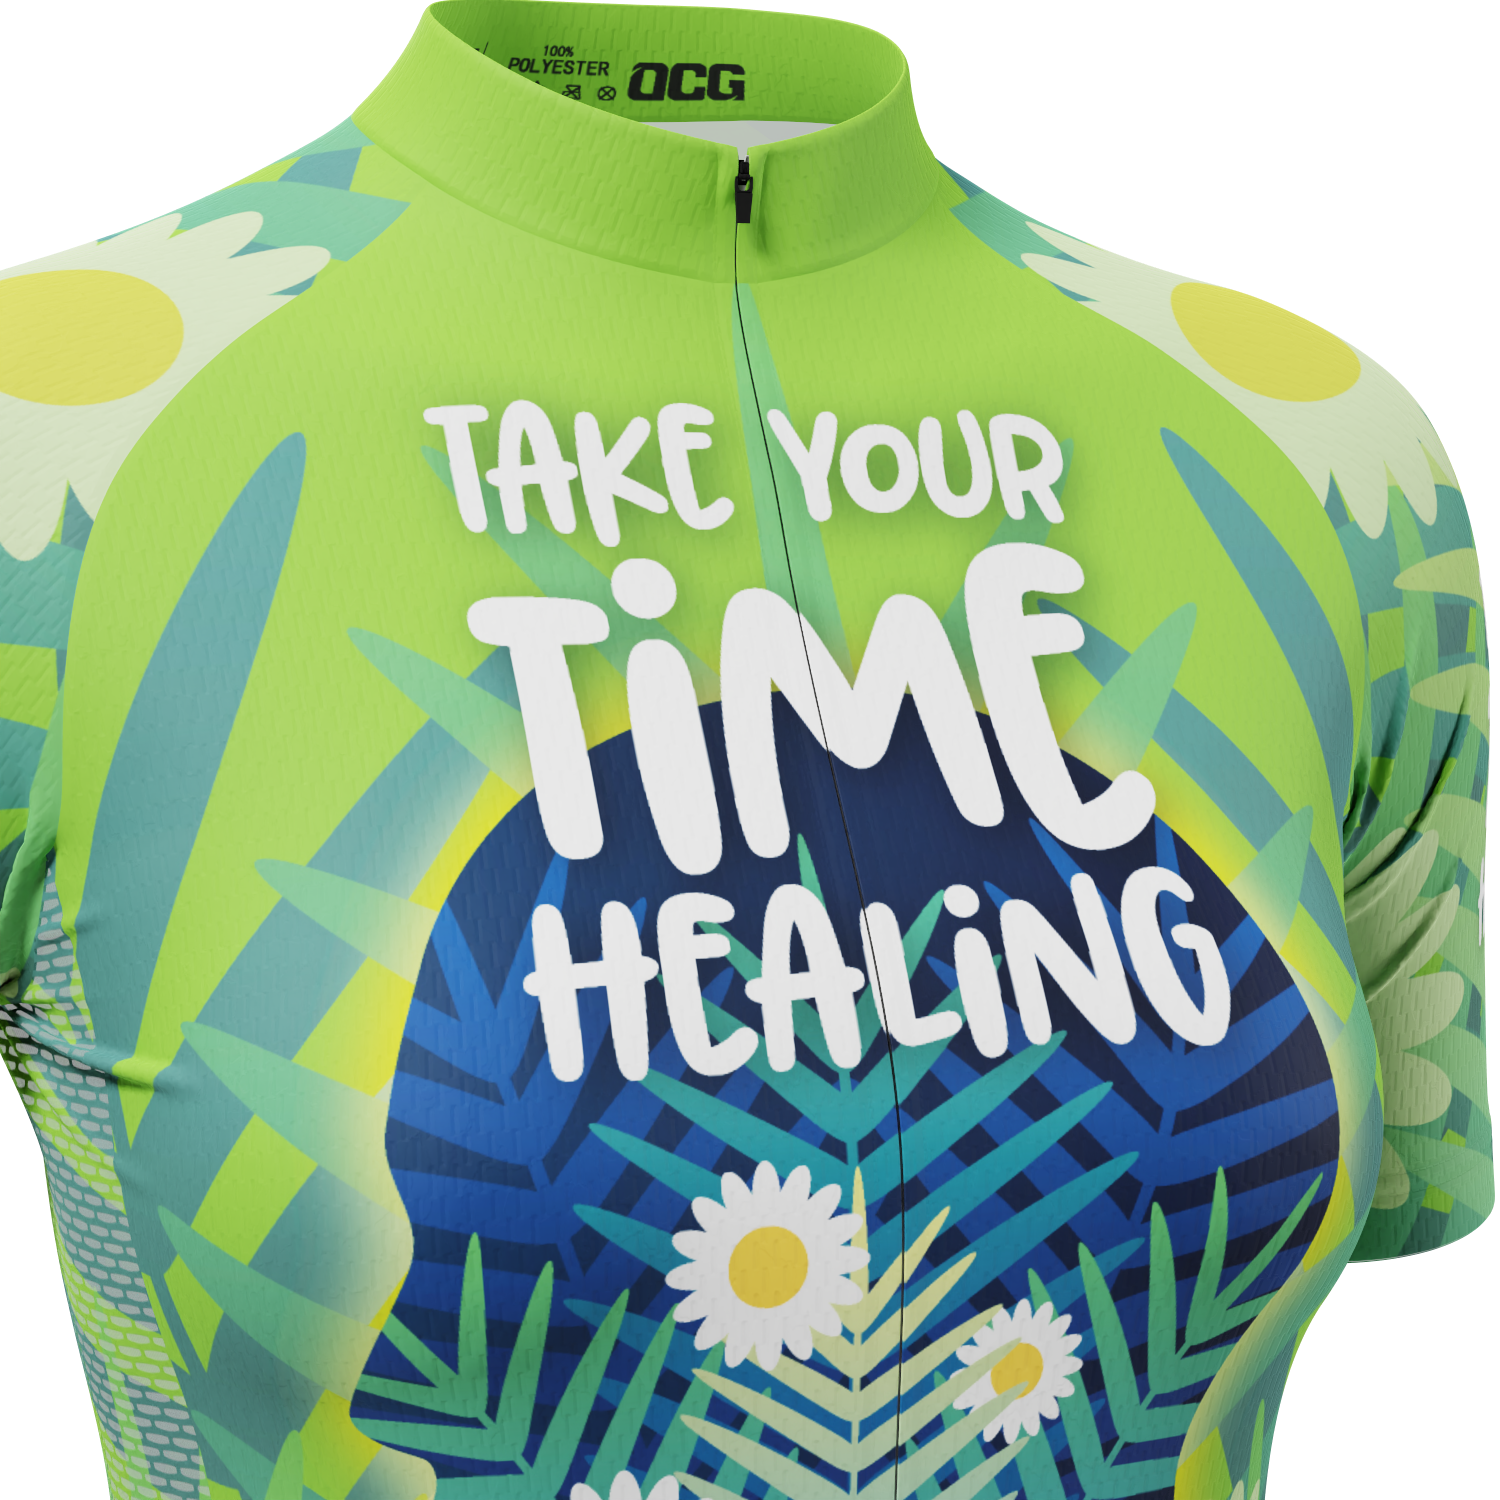 Women's Mental Health-Take Your Time Healing Short Sleeve Cycling Jersey